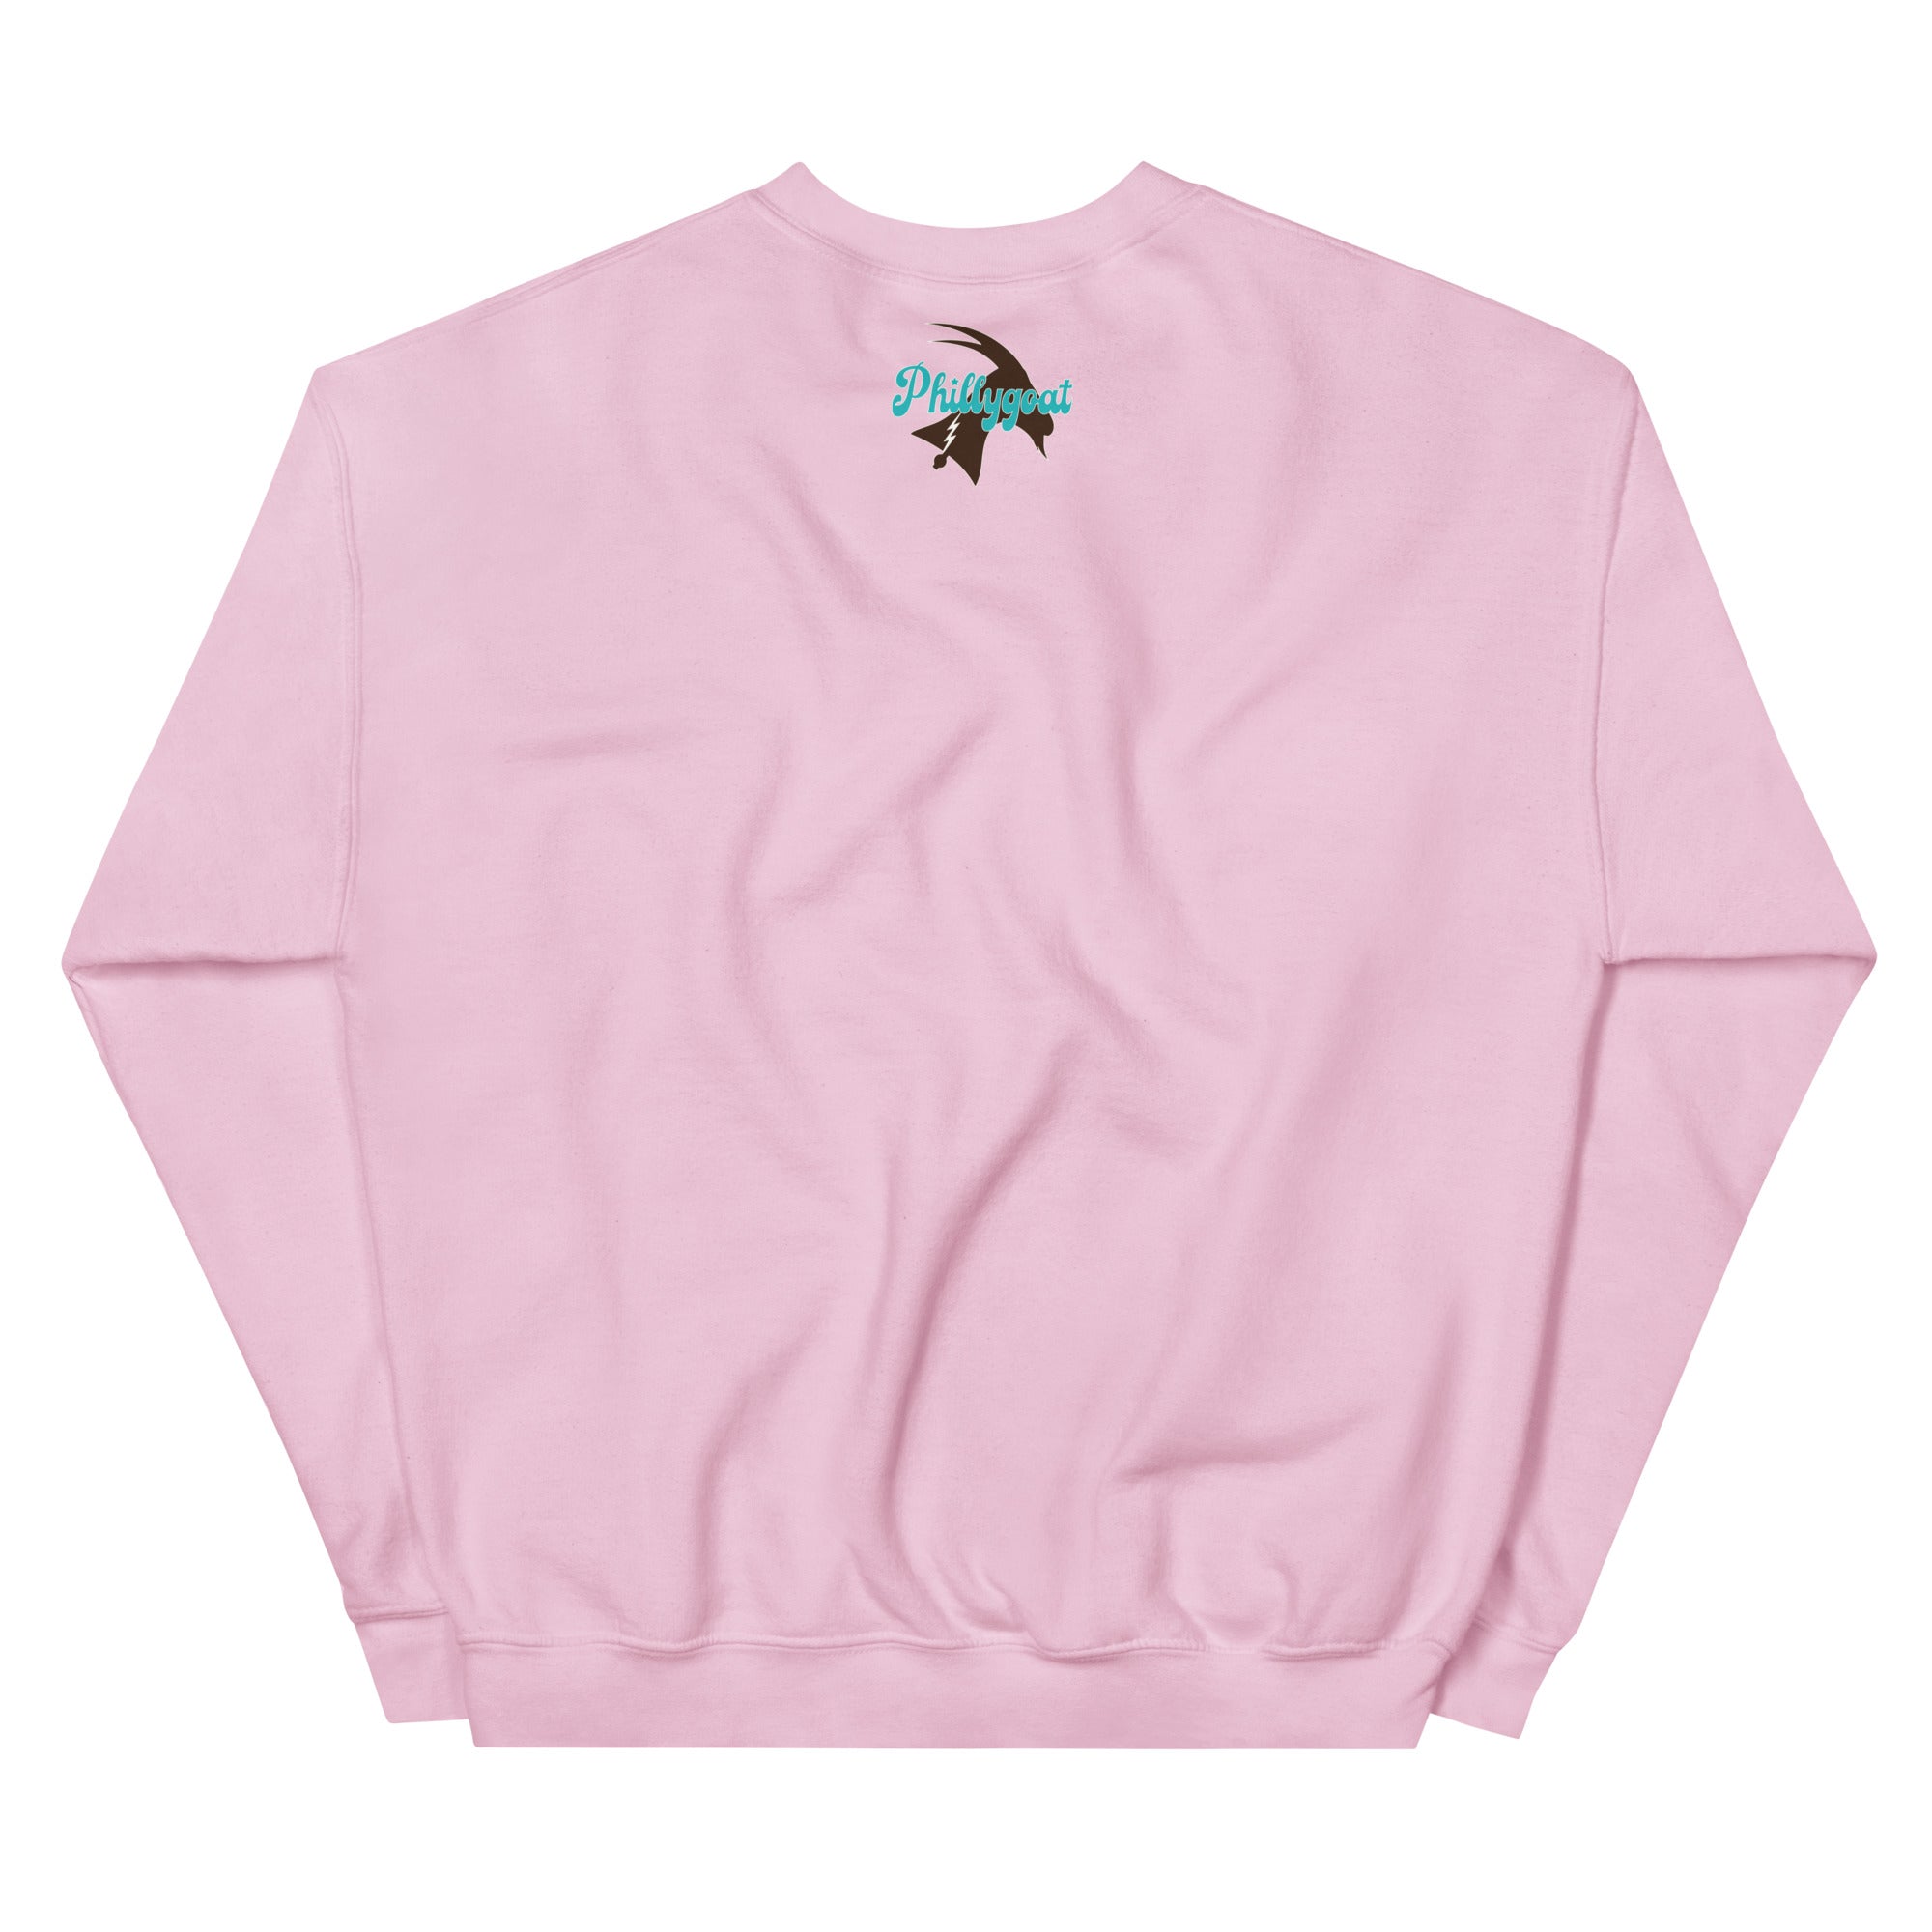 ben simmons pink sweater